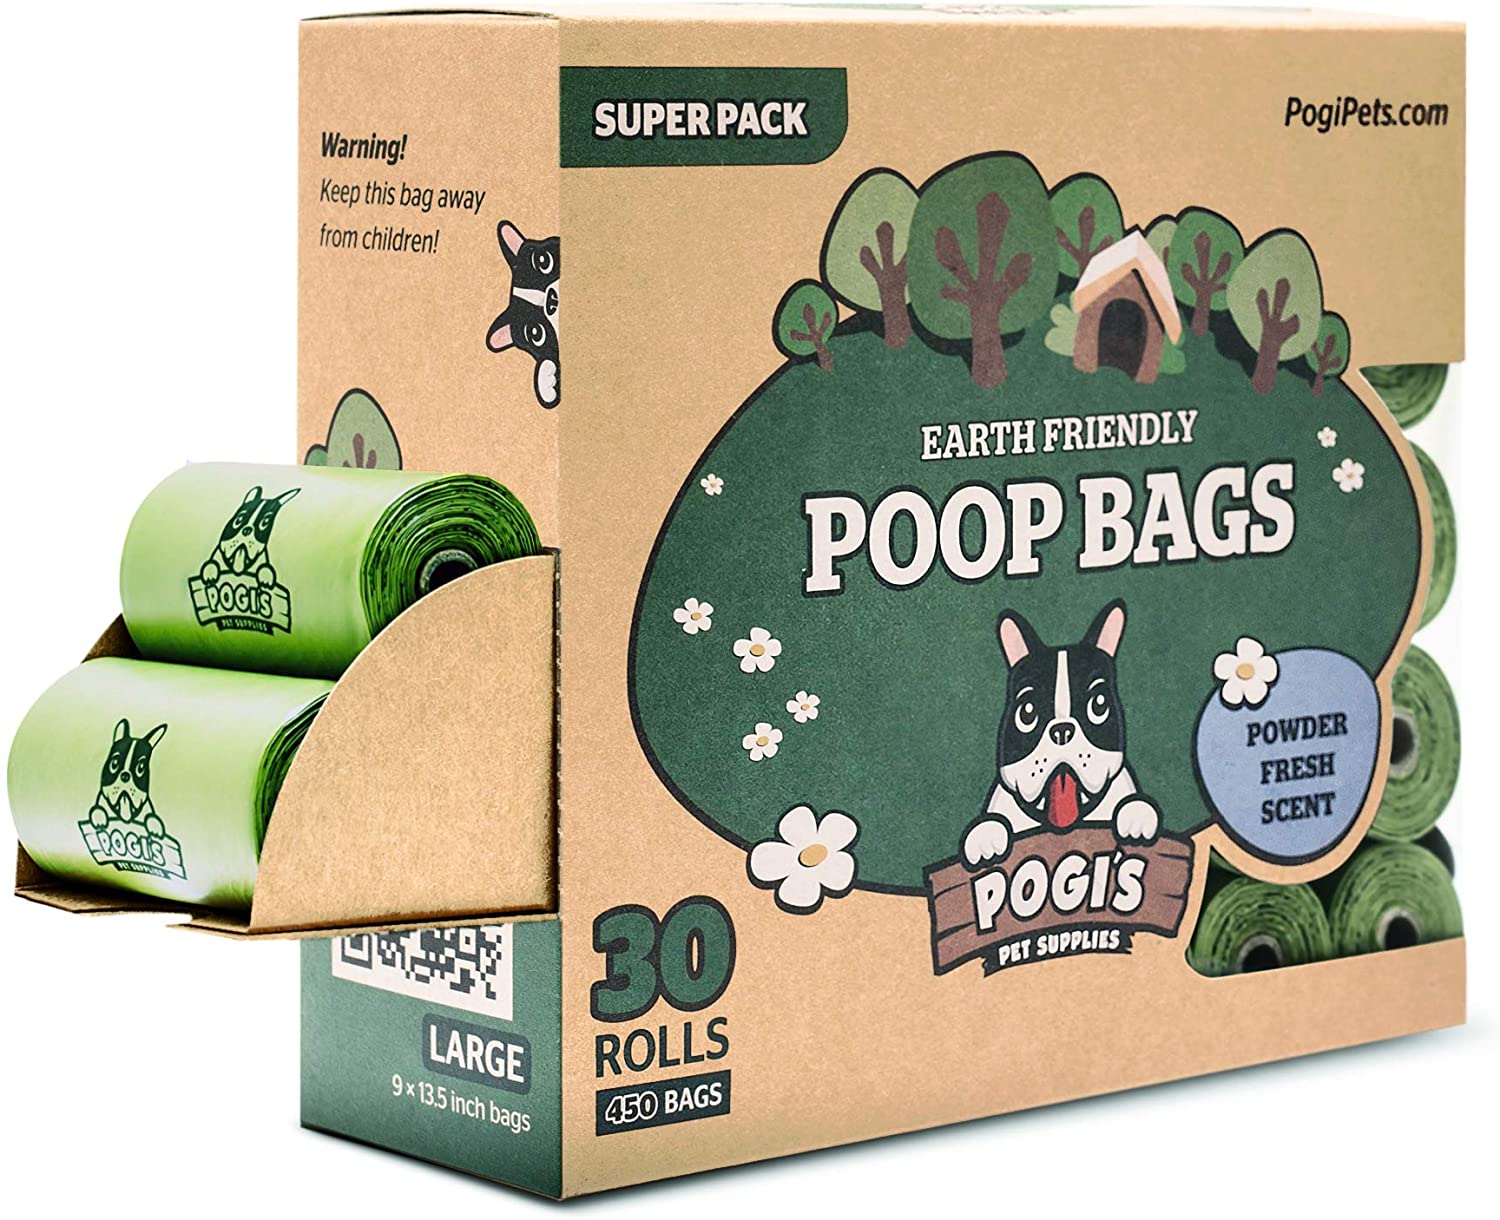  Pogi's Poop Bags - Bolsas para excremento de Perro - 30 Rollos (450 Bolsas) - Grandes, Biodegradables, Perfumadas, Herméticas 